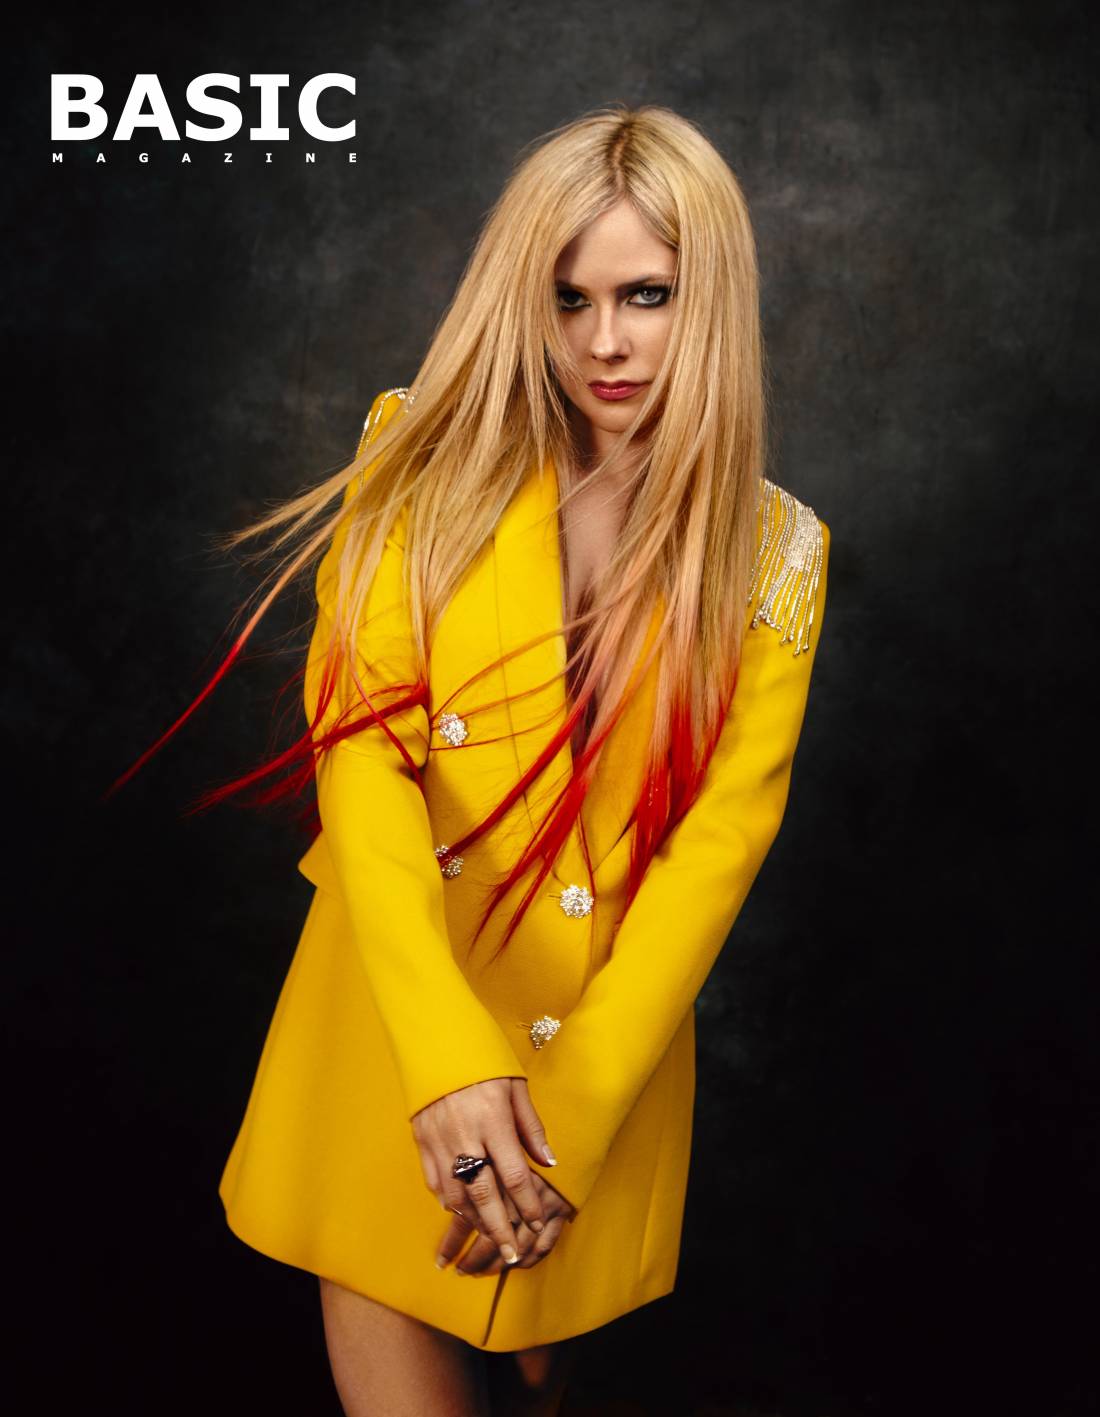 Basic – Avril Magazine Lavigne Avril Lavigne